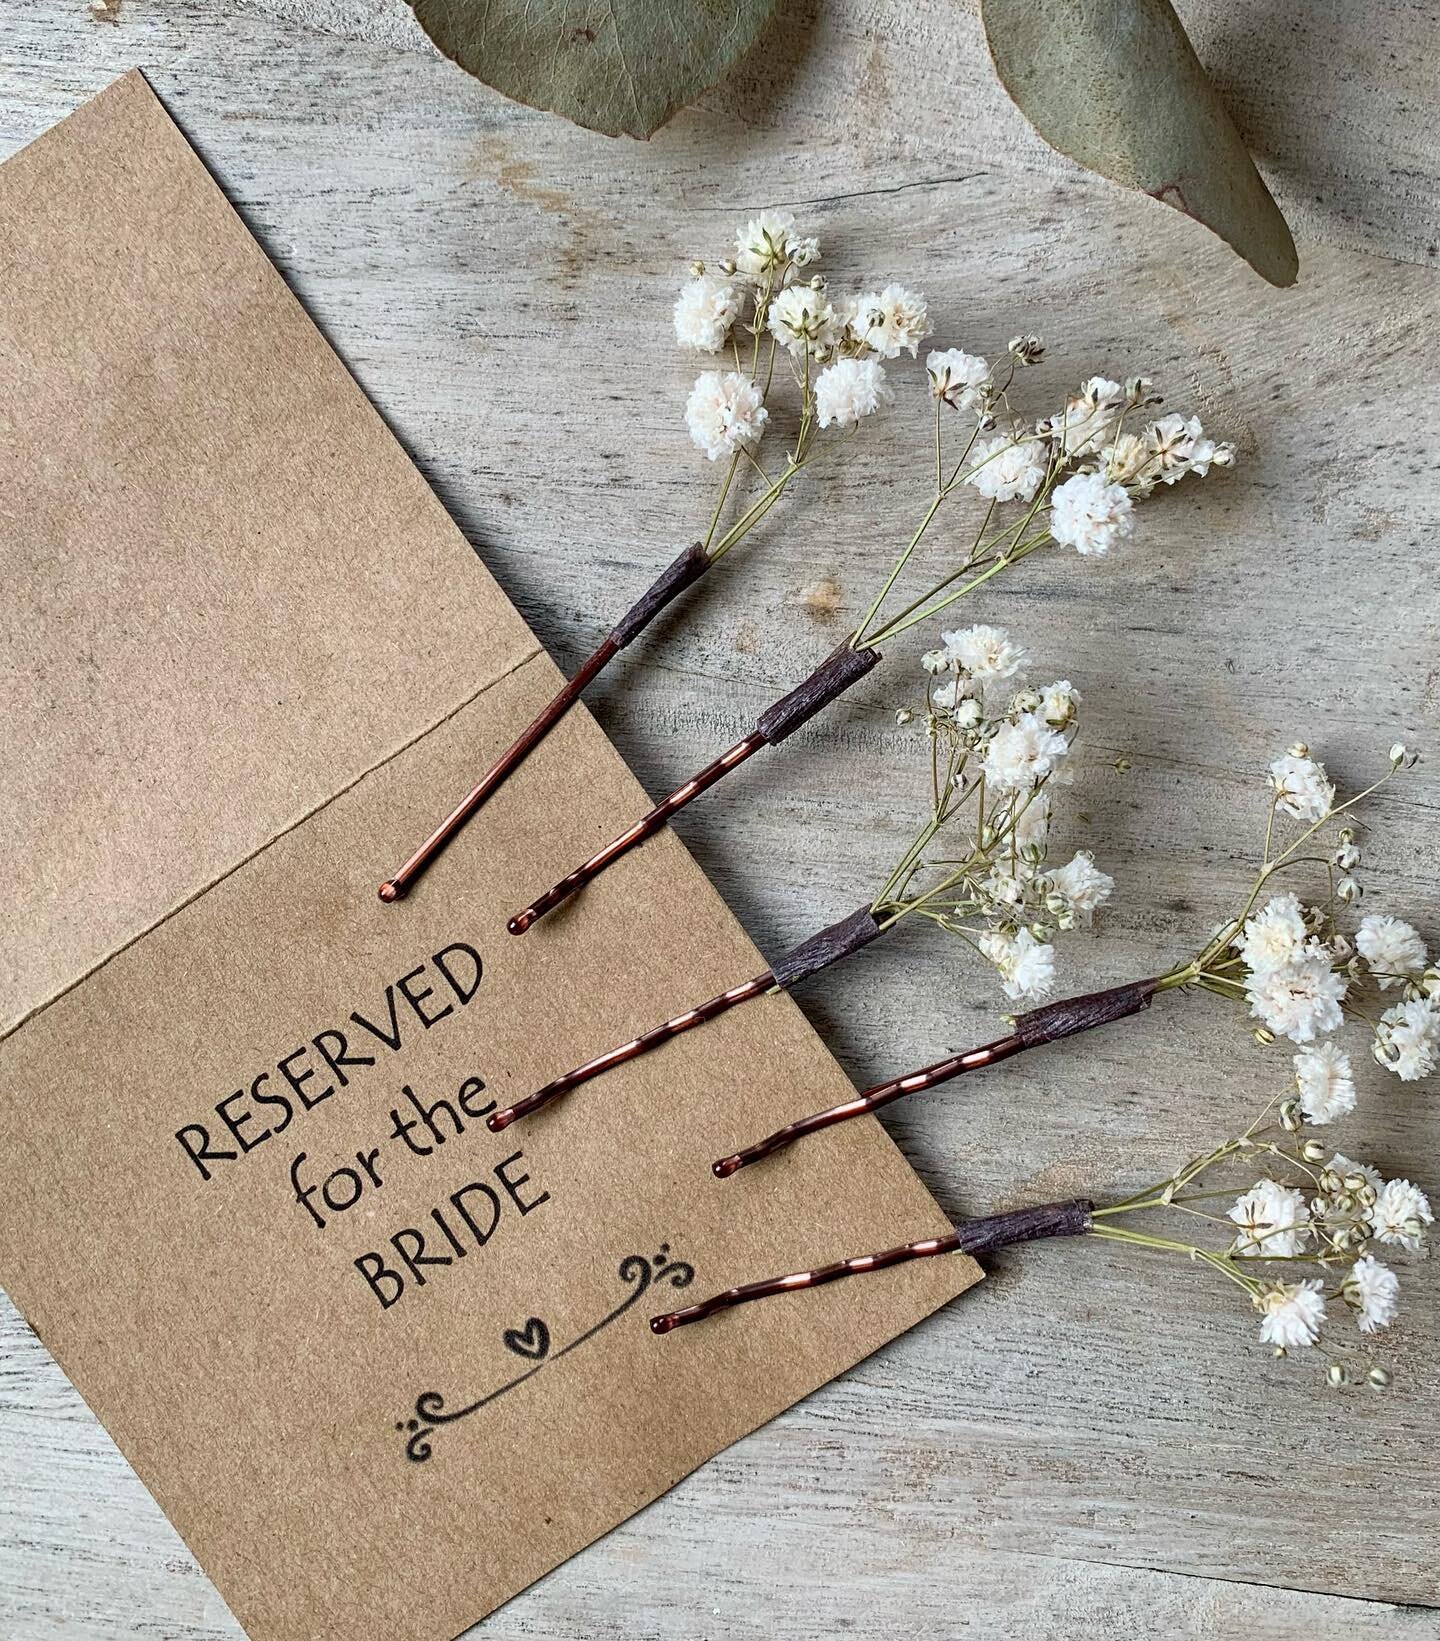 NEW LISTING! Find me on Etsy! https://etsy.me/3GEukeA
.
Handmade hair pins from self dried flowers!
.
.
#weddinghair #weddingflowers #bridehairstyle